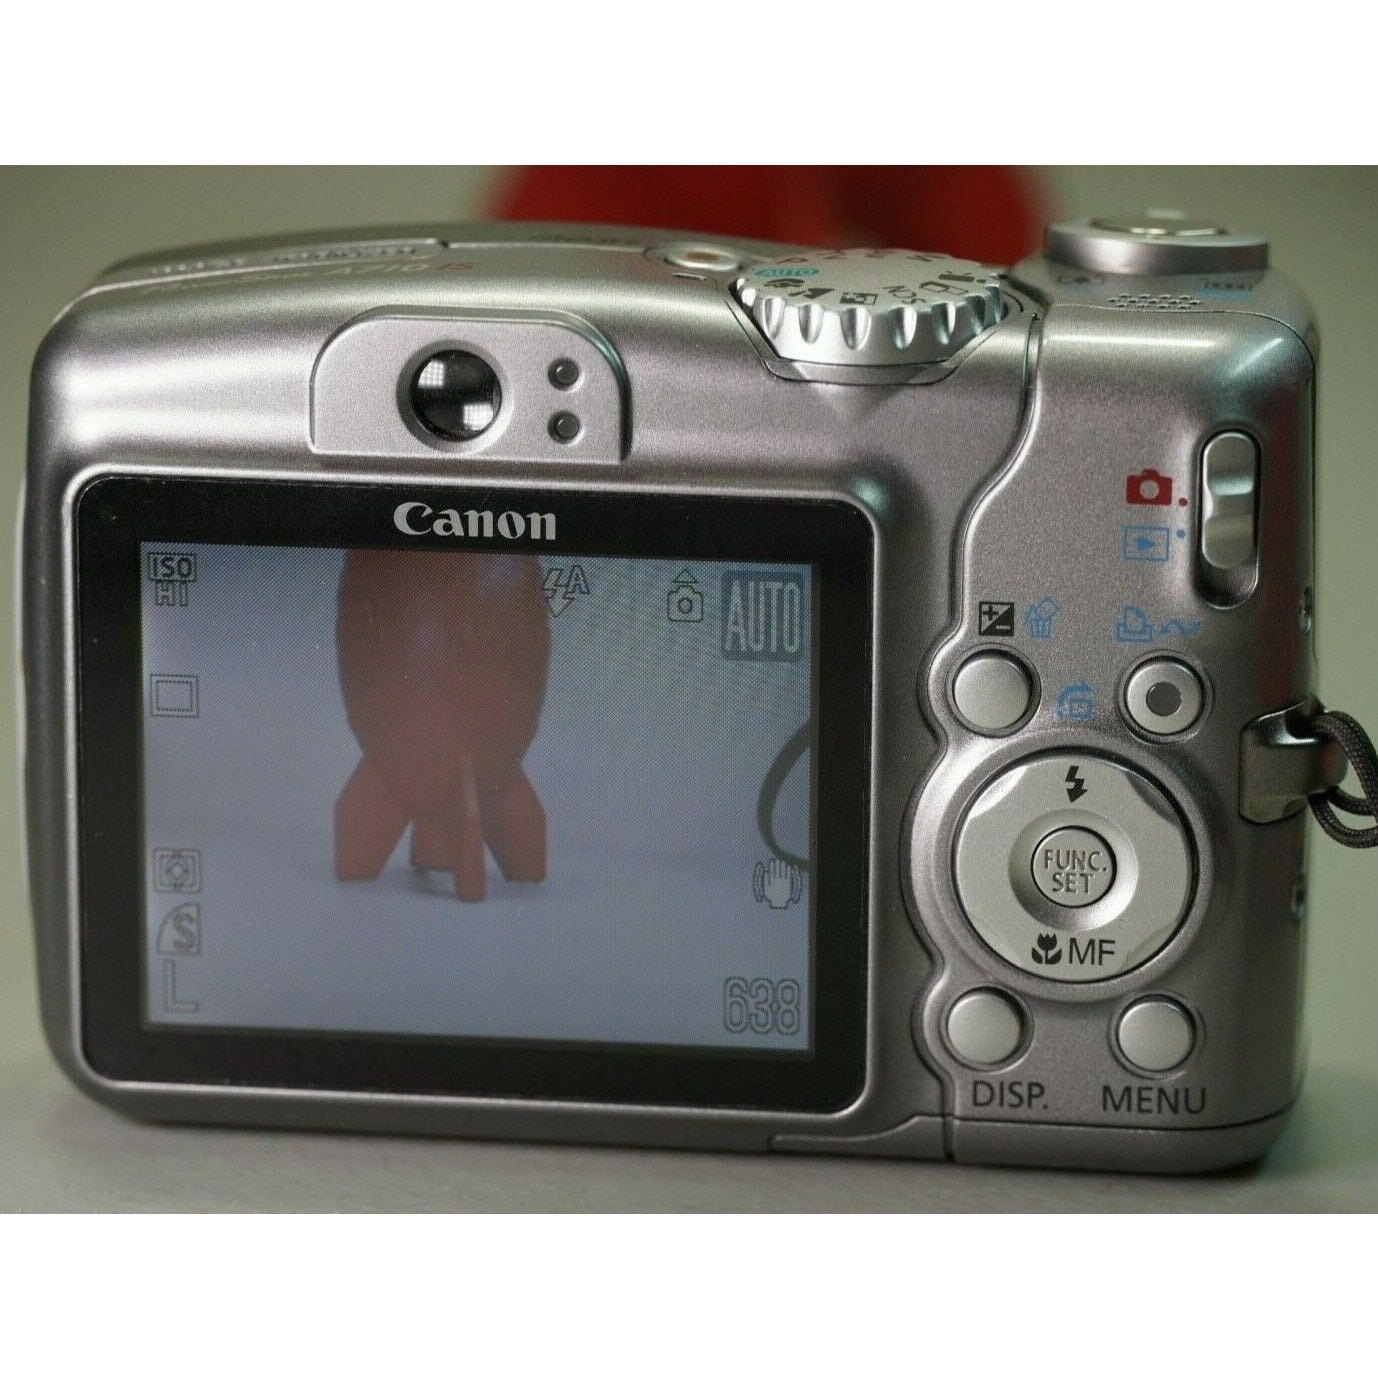 rijk Vaardigheid Het beste Canon Powershot A710 IS 7.1MP Digital Camera - Etsy